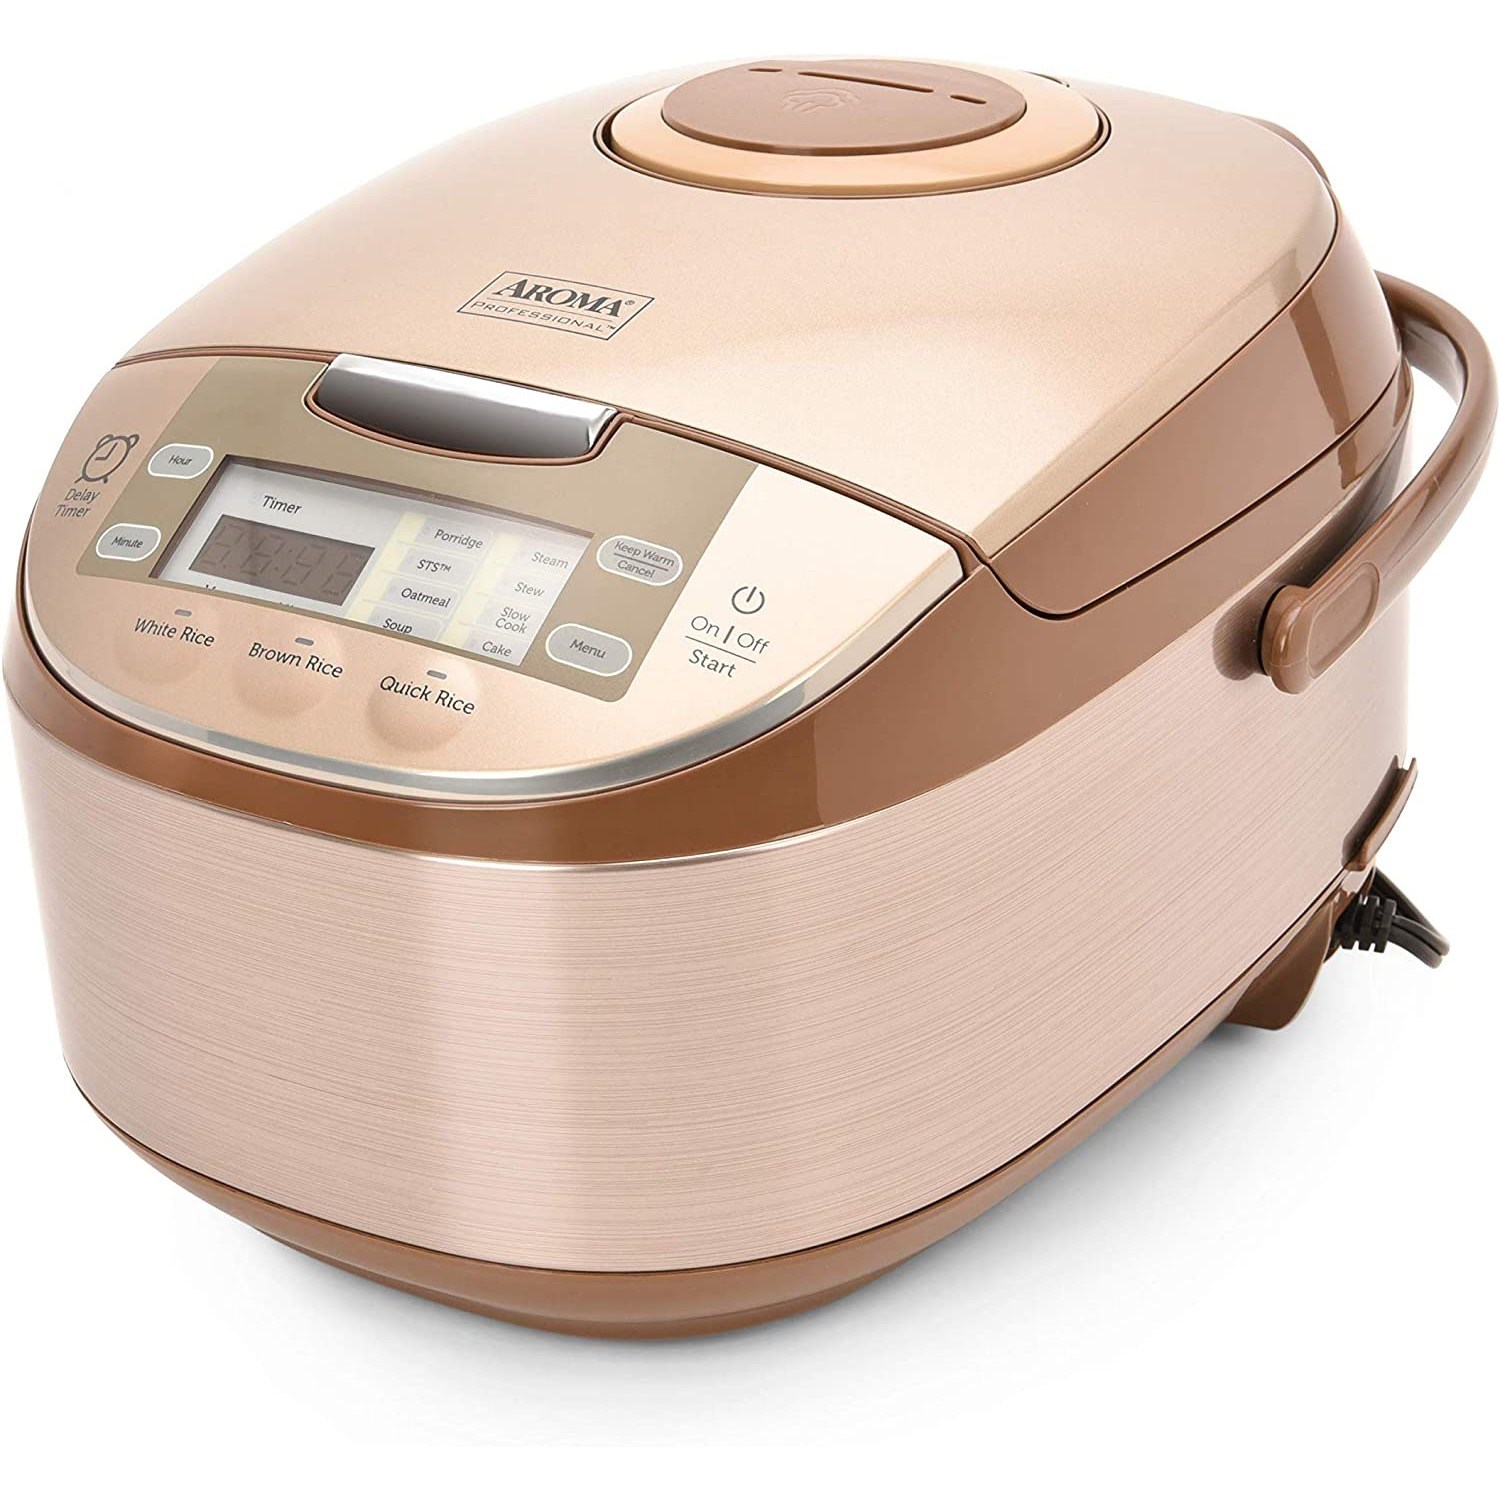 Aroma Housewares ARC-6206C Professional Digital Rice Cooker & Multicooker  with Ceramic Inner Pot, Steam Basket